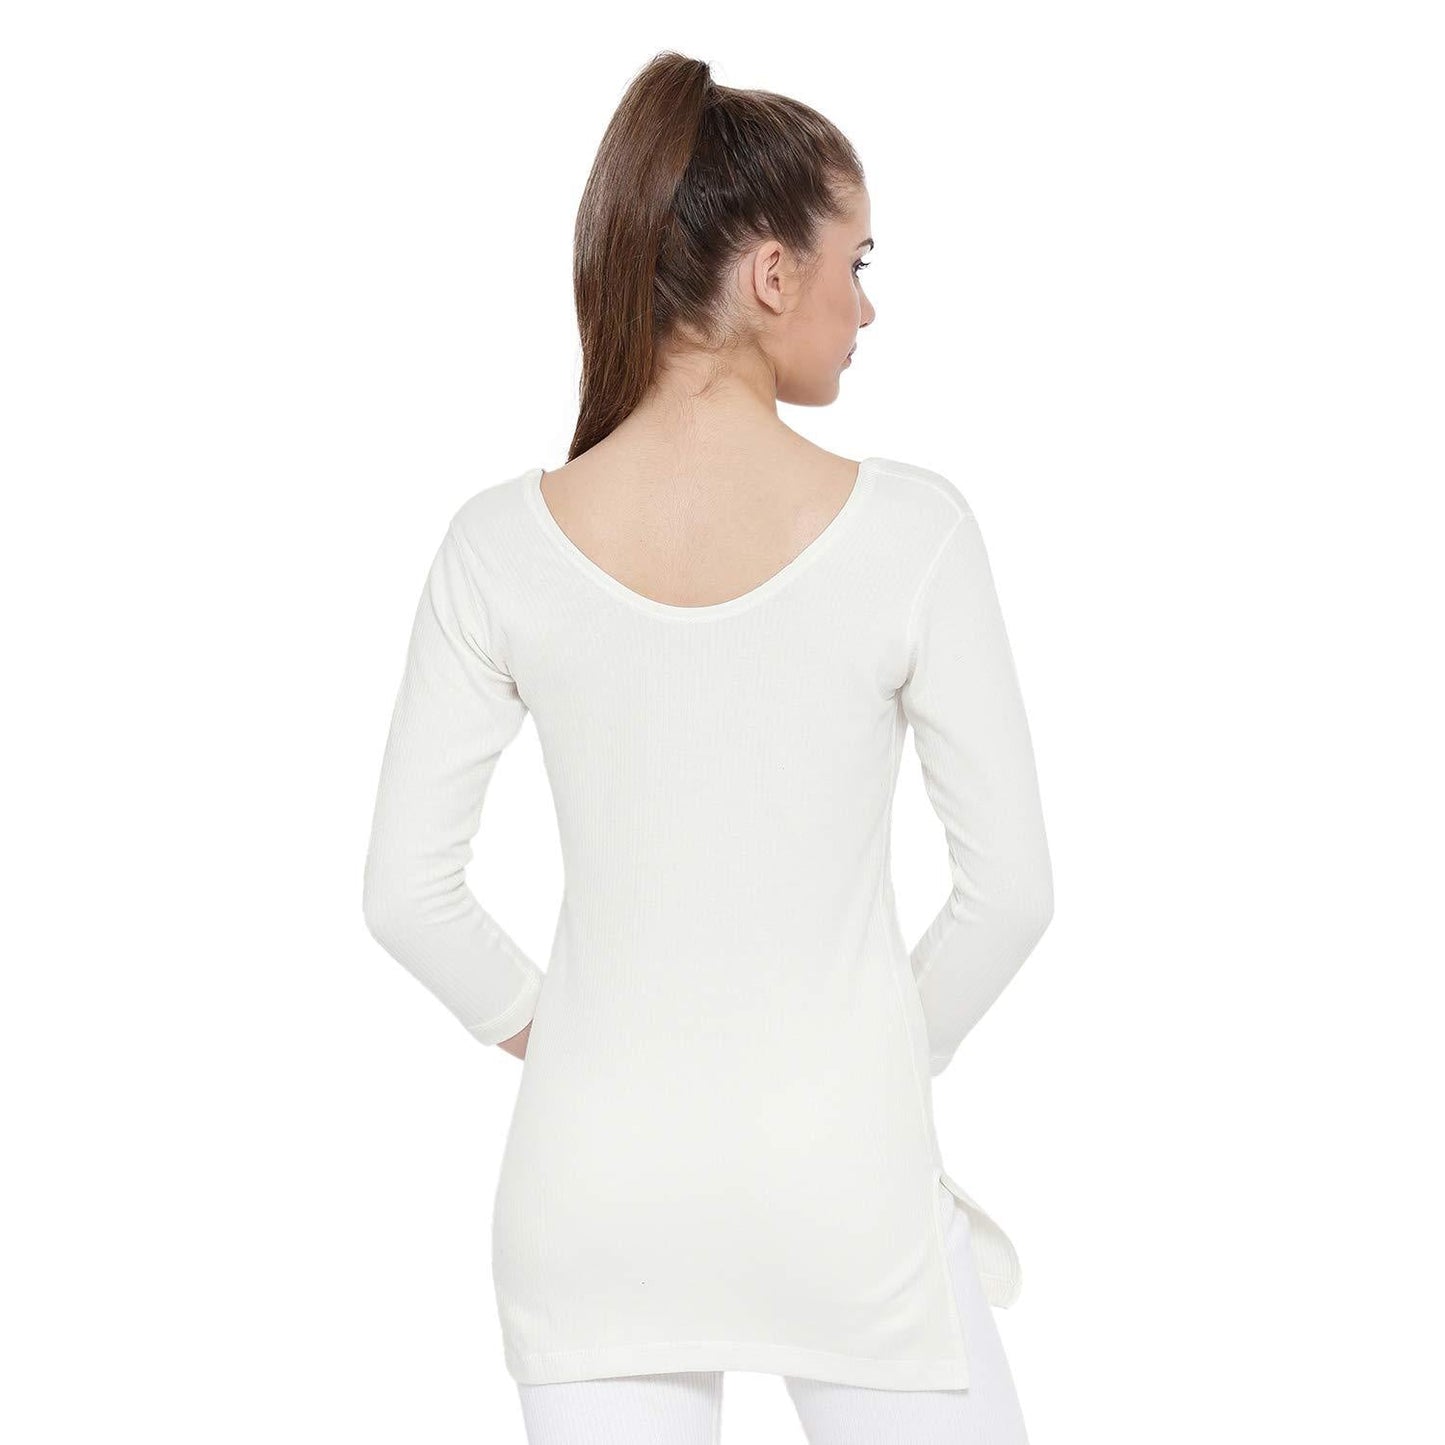 Monte Carlo White Cotton Thermal Warmer Winter Wear Top for Ladies - Stilento